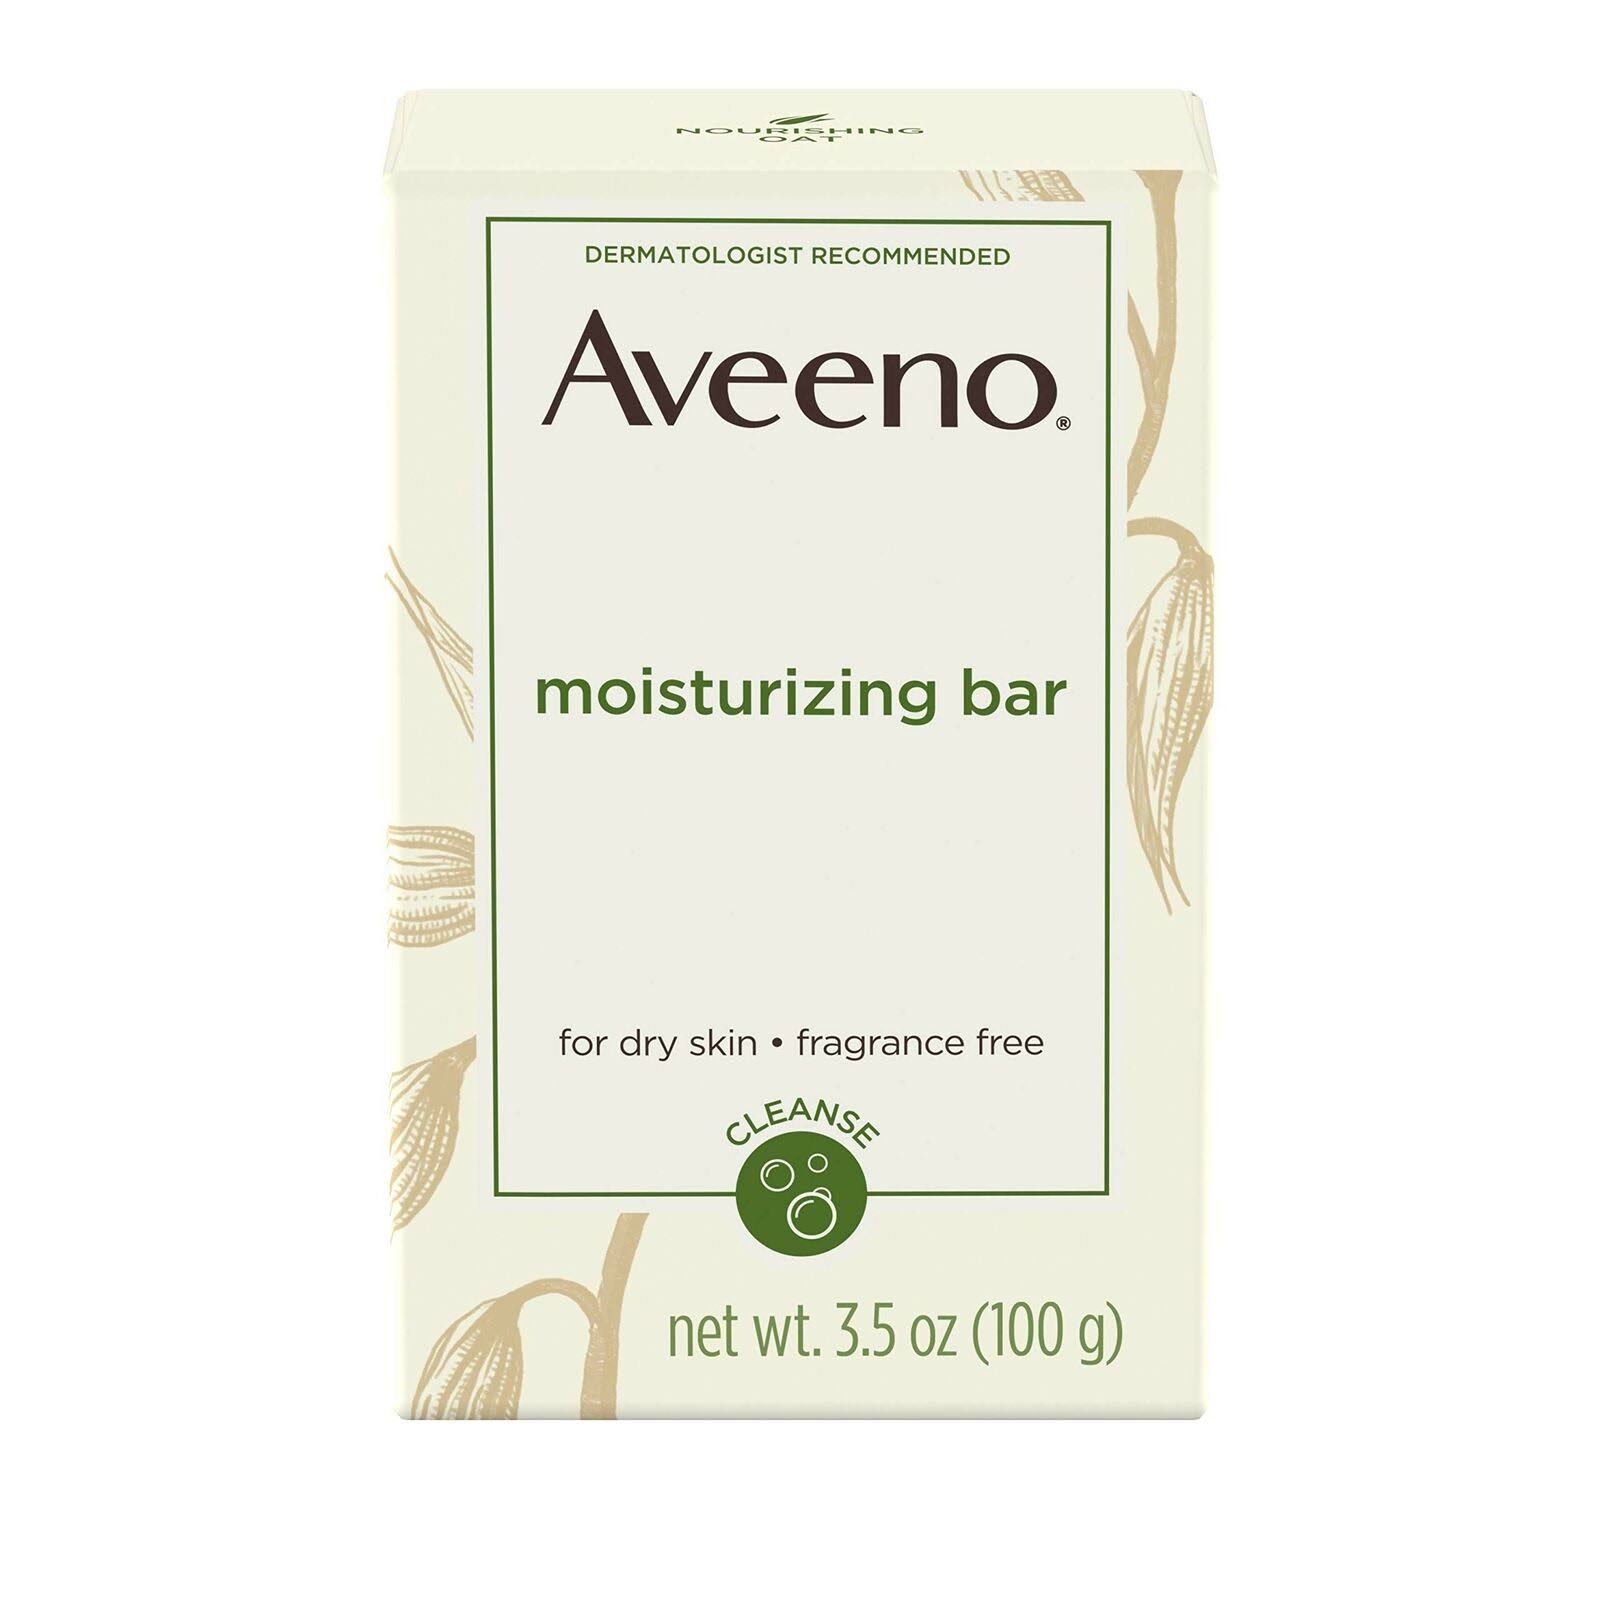 Aveeno Active Naturals Moisturizing Bar - 3.5 oz